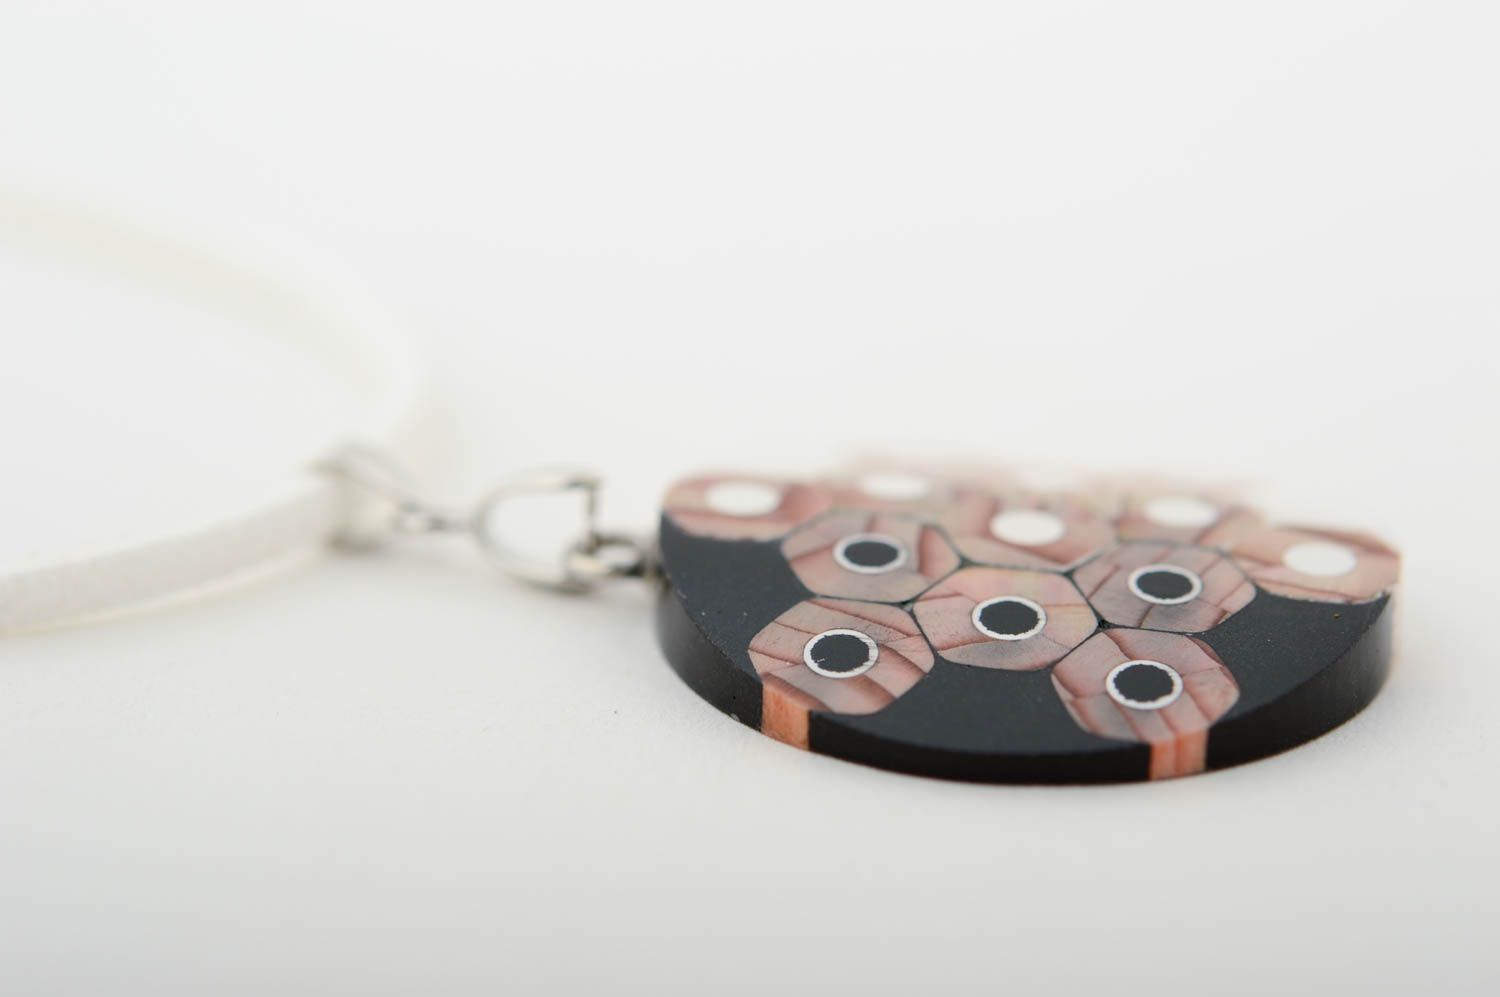 Handmade pendant unusual gift designer jewelry wooden pendant gift for her photo 4